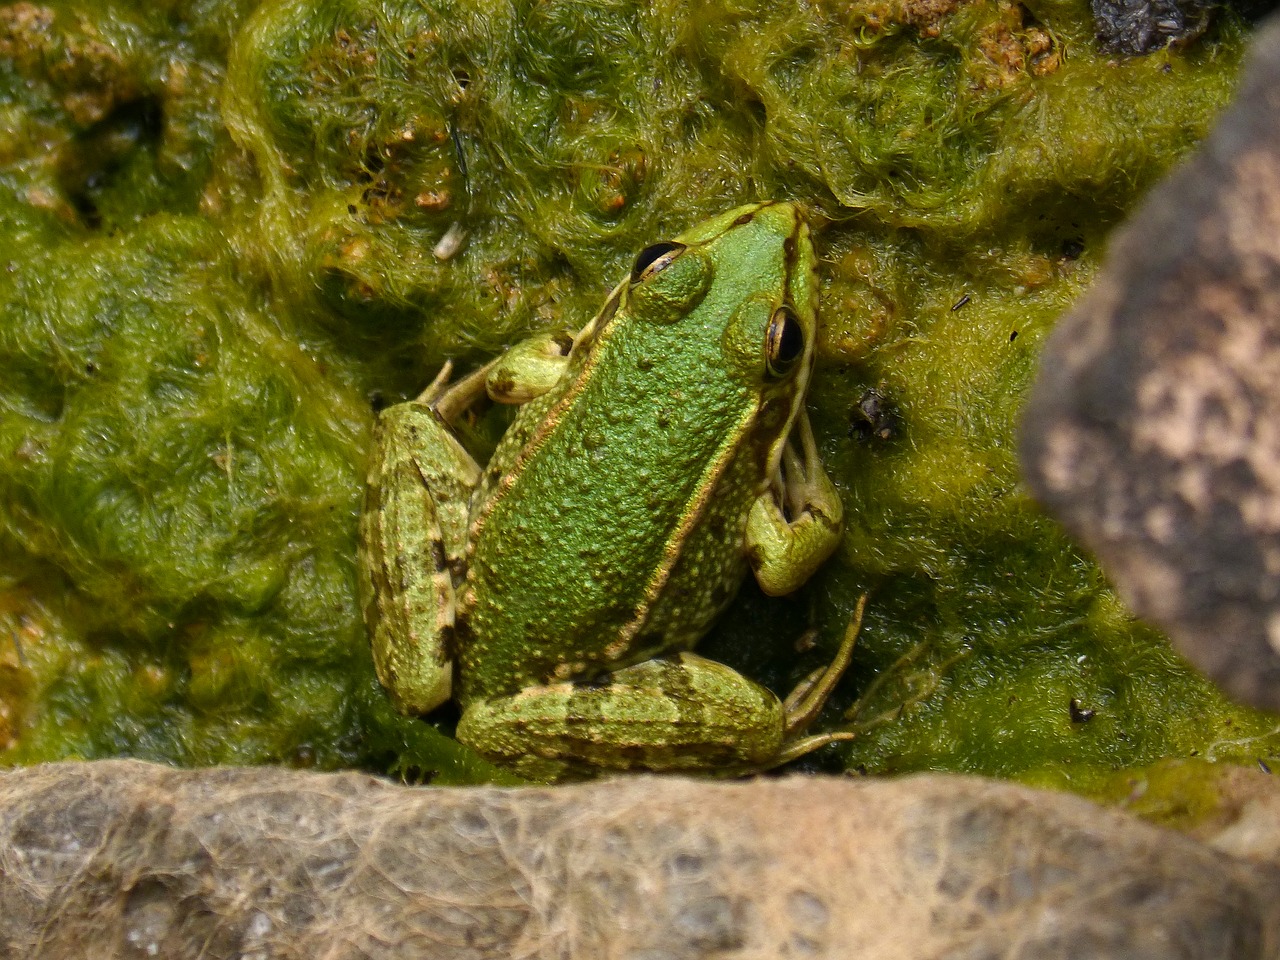 Frog, green frog, pond, algae, batrachian - free image from needpix.com